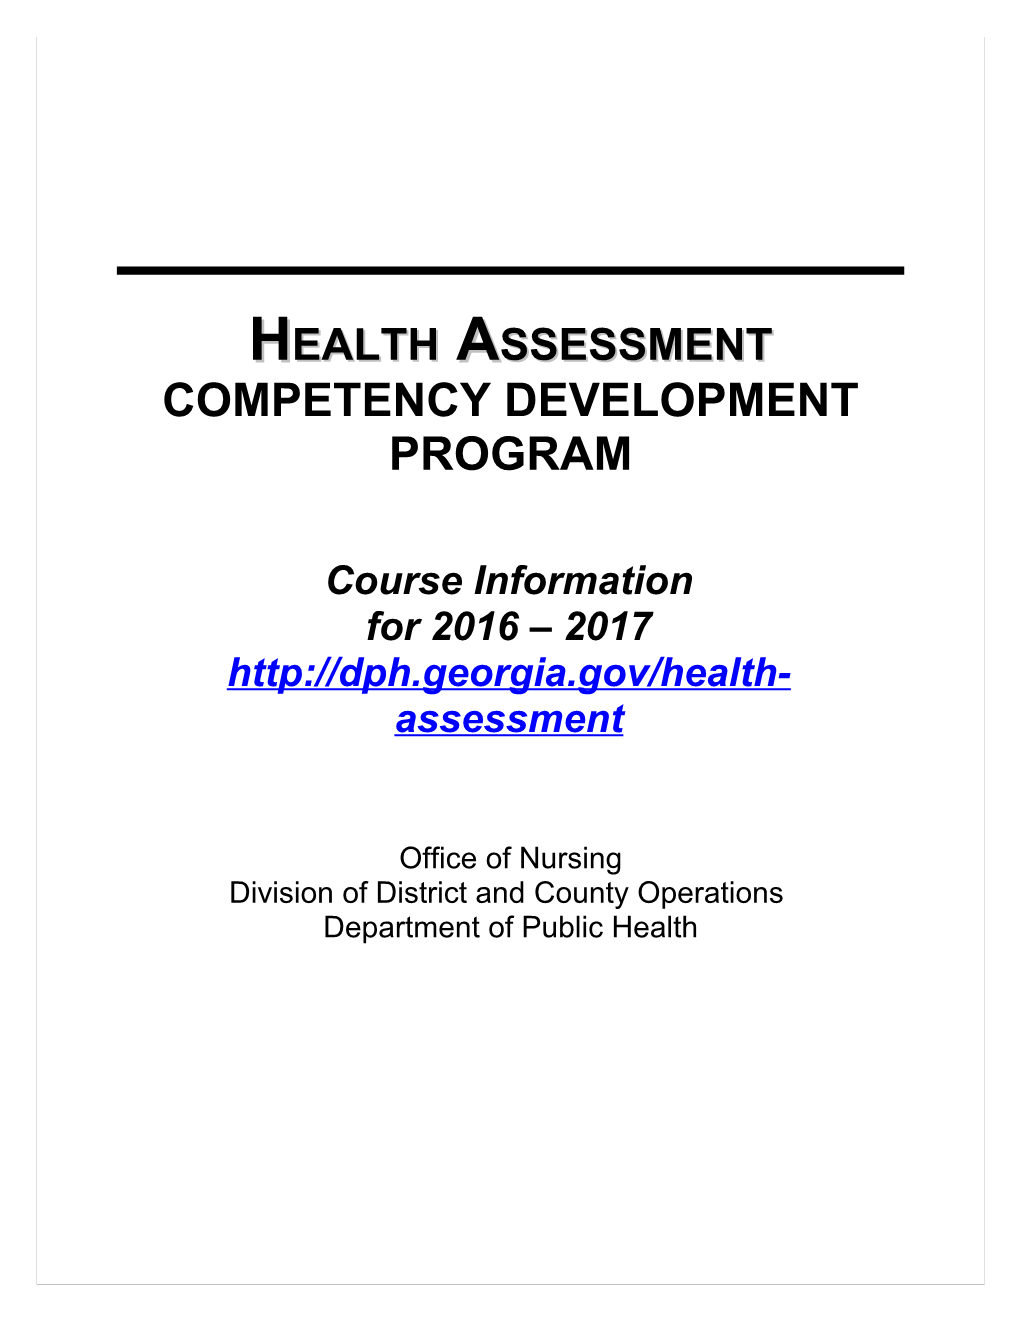 Health Assessment Competency Development Program